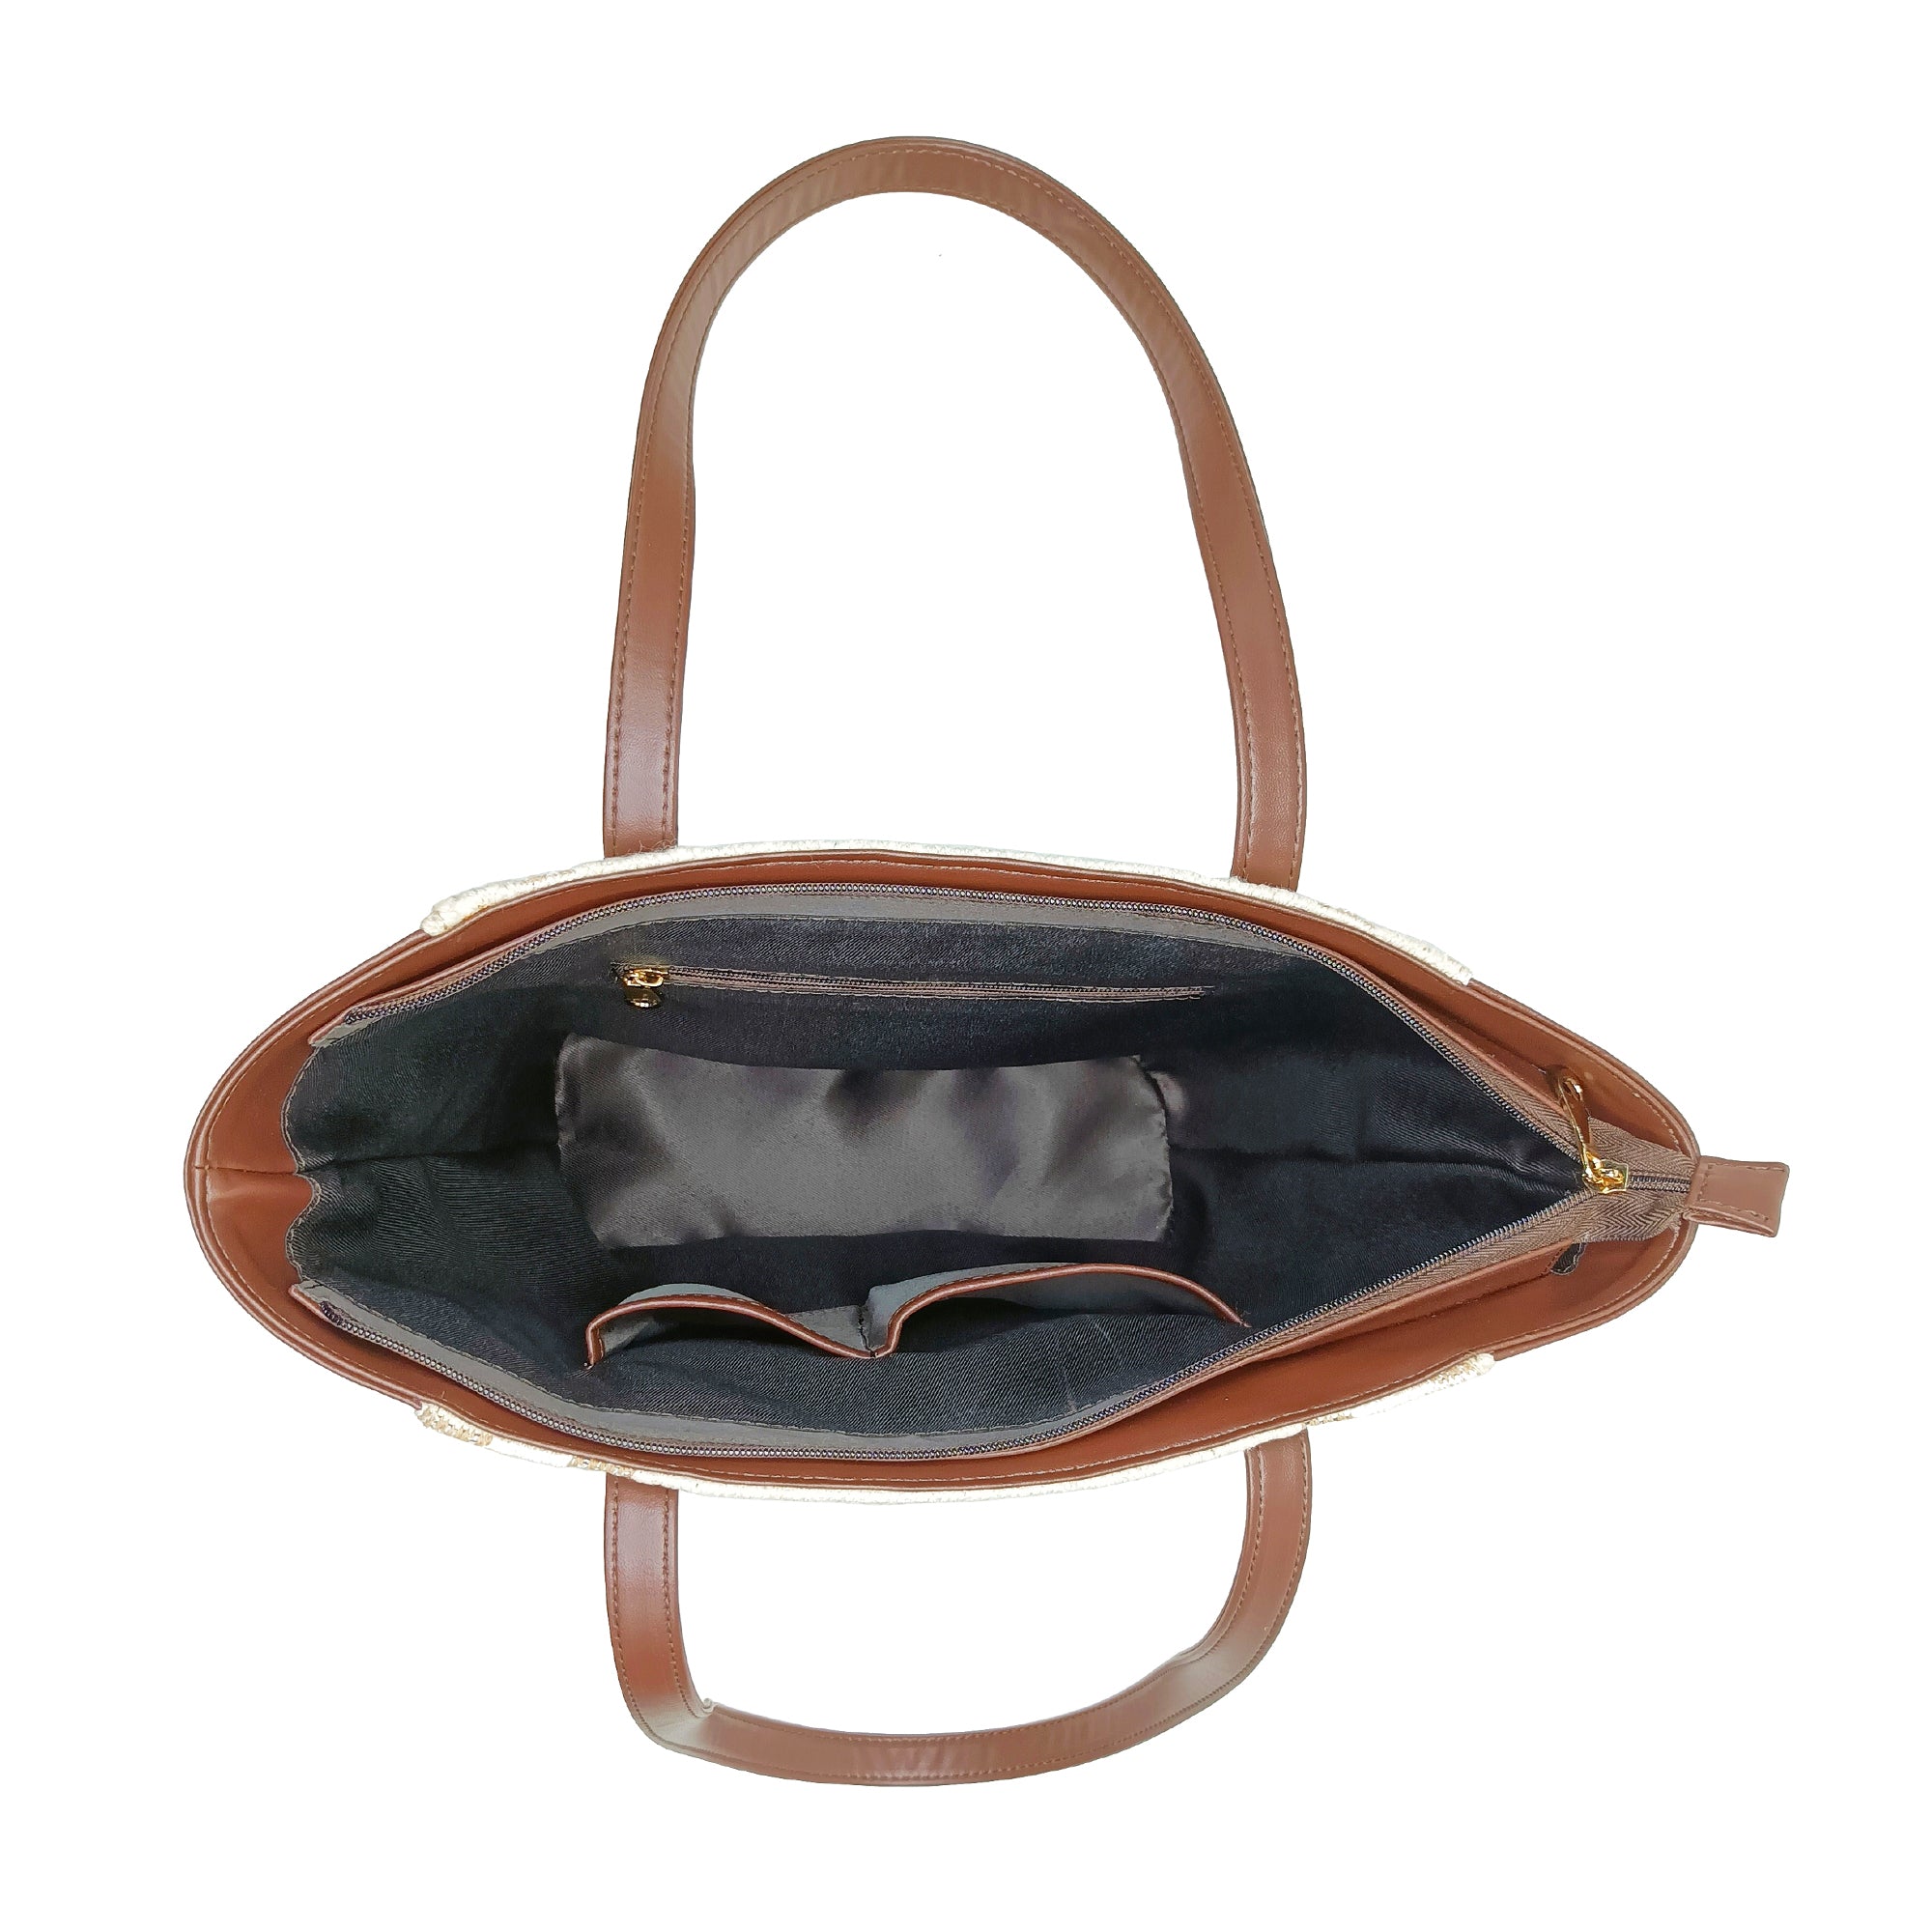 IMARS Stylish Handloom Tote Bag Brown for Women and Girls